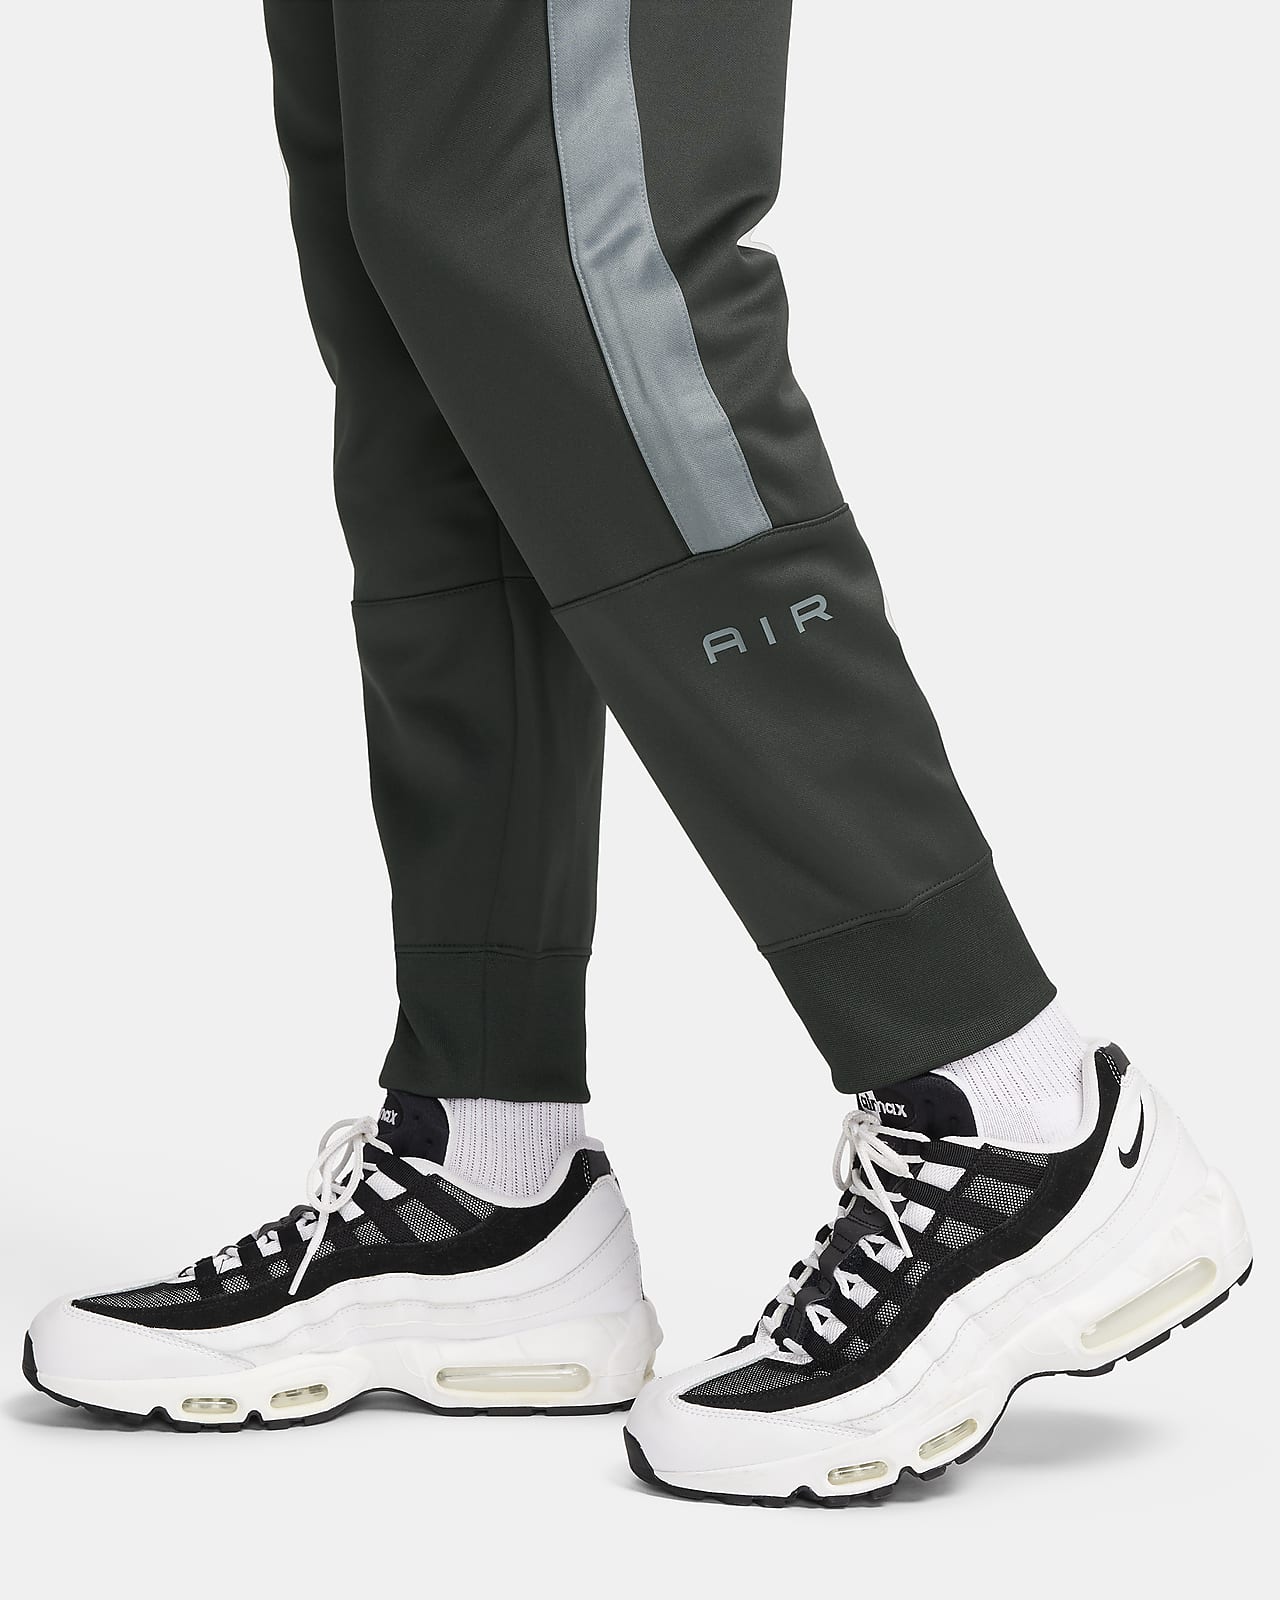 Homme Nike Joggers, Black, Grey Nike Joggers